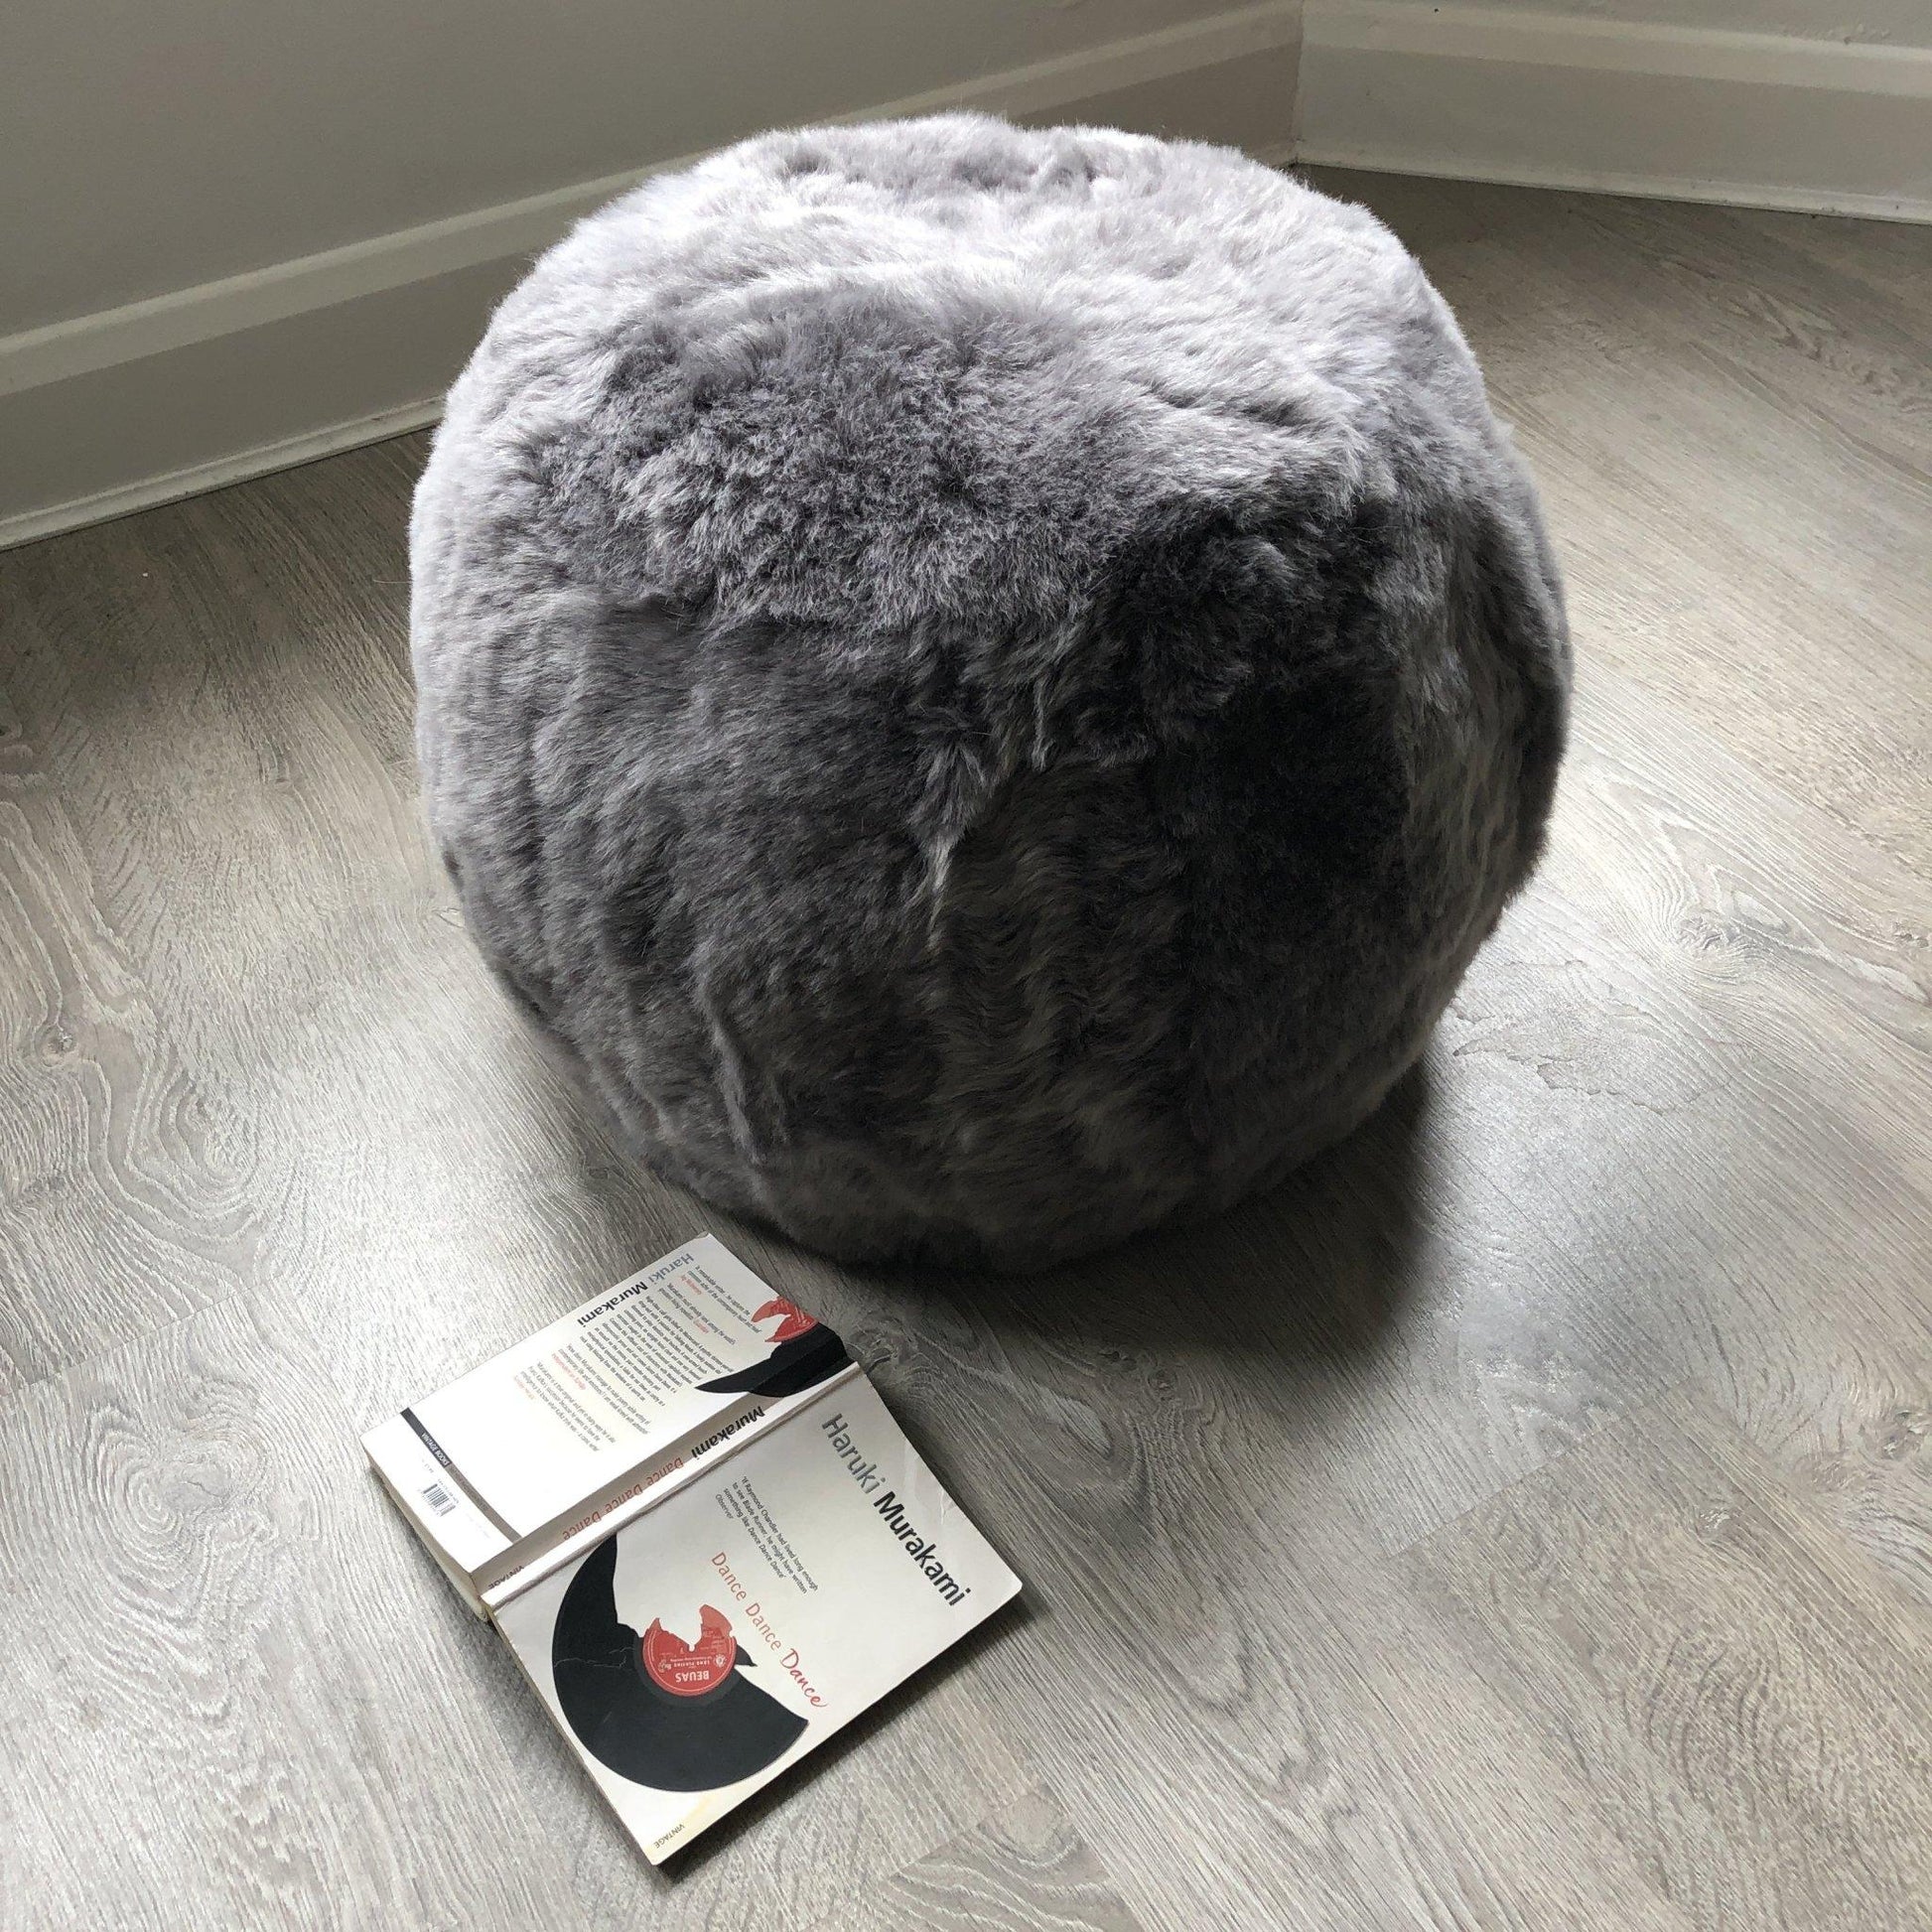 The Boule Icelandic Sheepskin Pouffe in Cool Grey Shorn by Wildash London - Haven